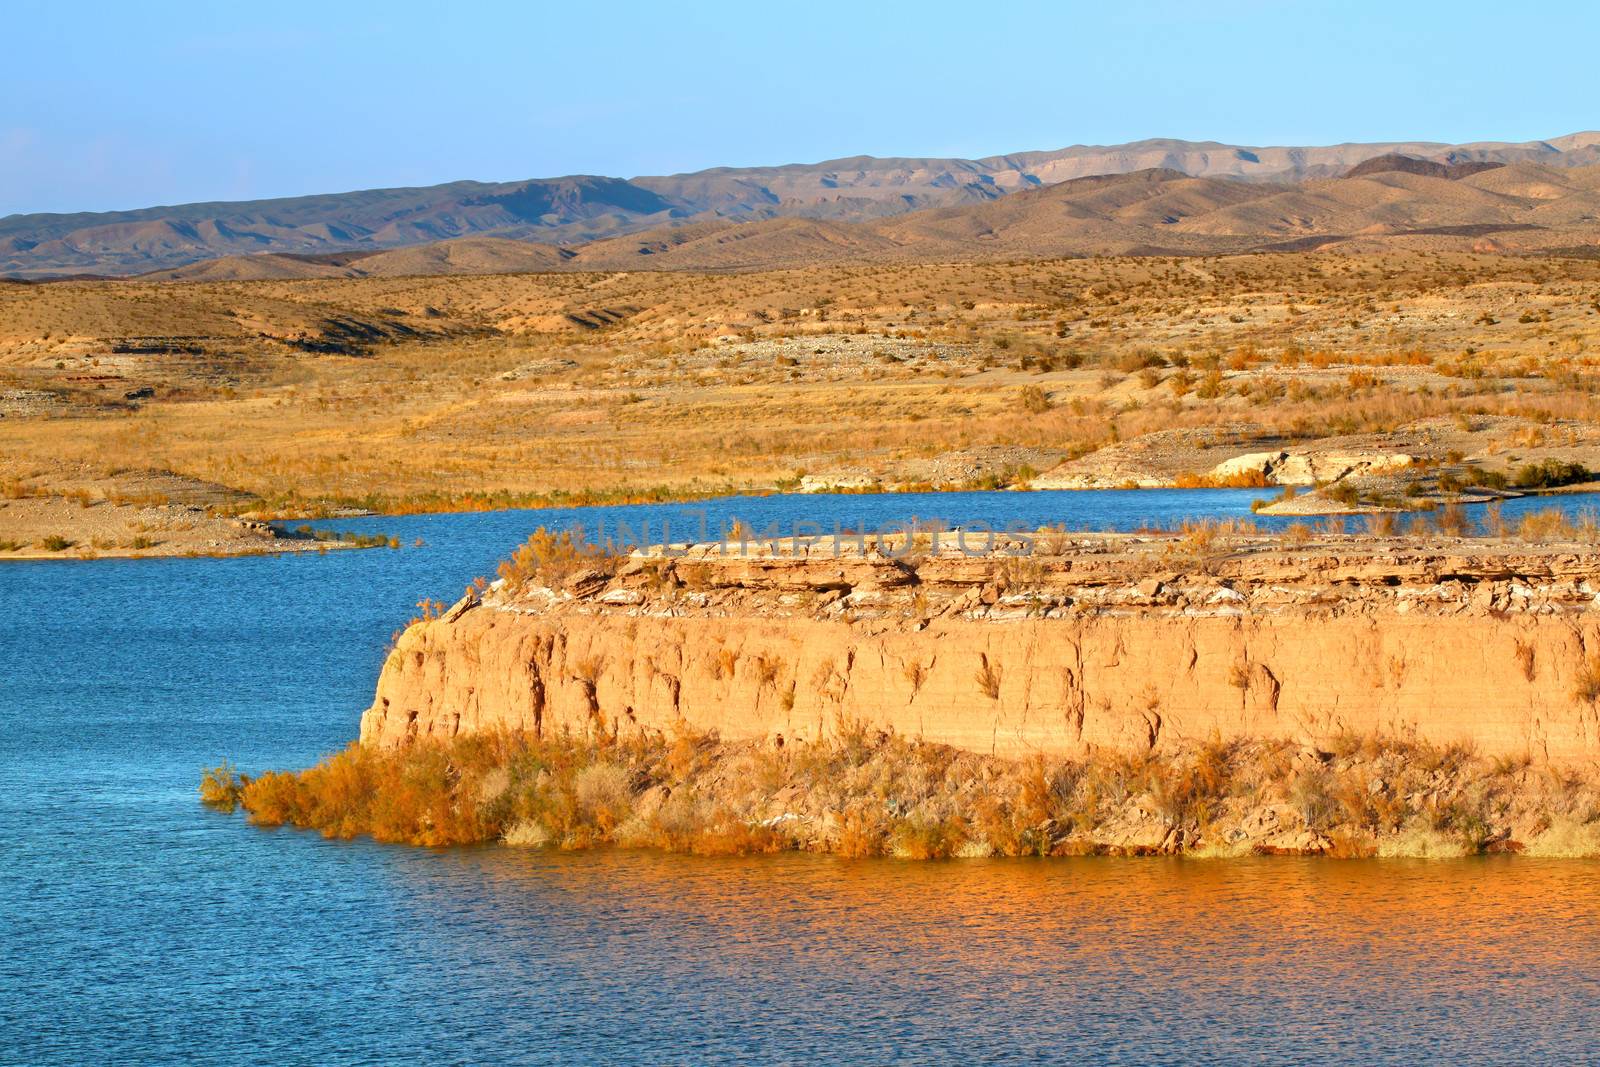 Shoreline of Lake Mead National Recreation Area east of Las Vegas, Nevada.